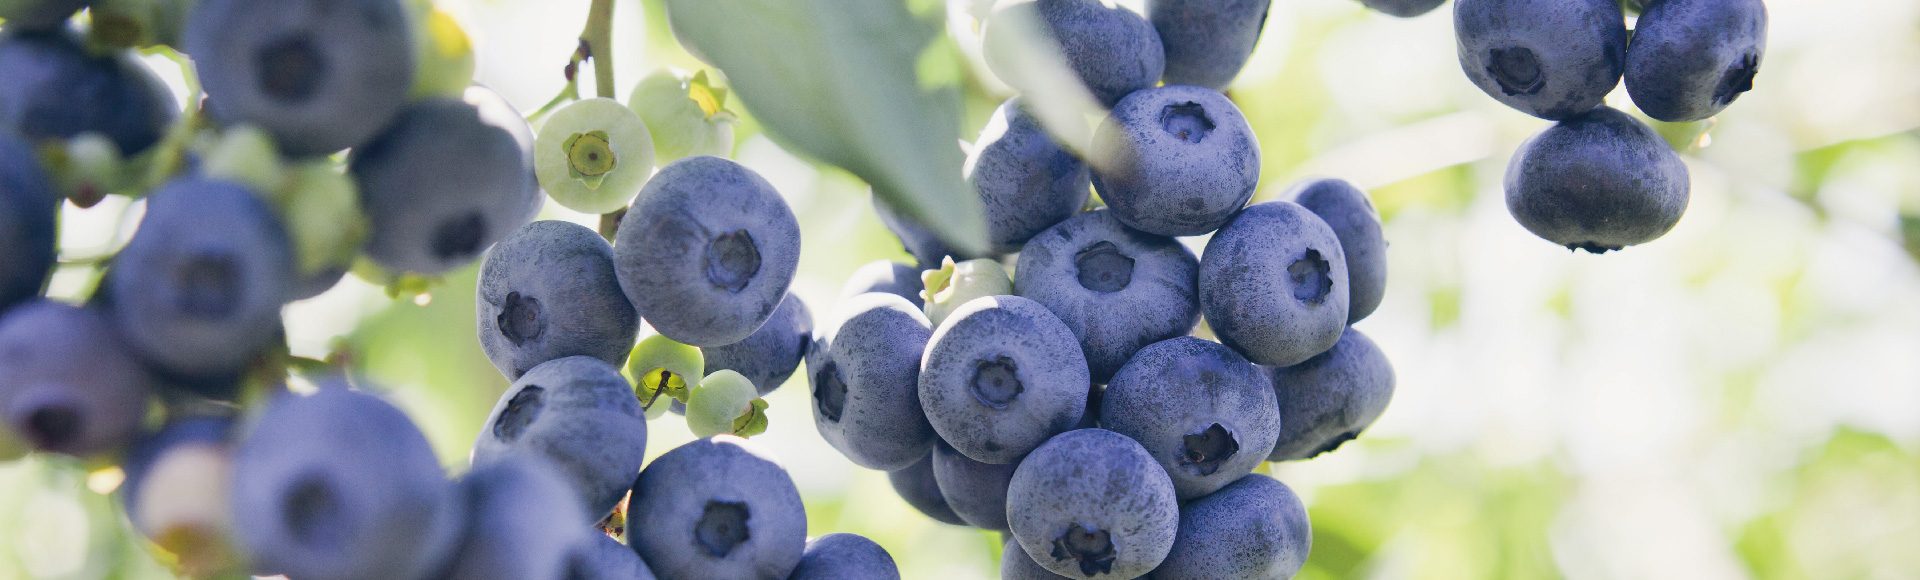 blueberry fertiliser and crop nutrition